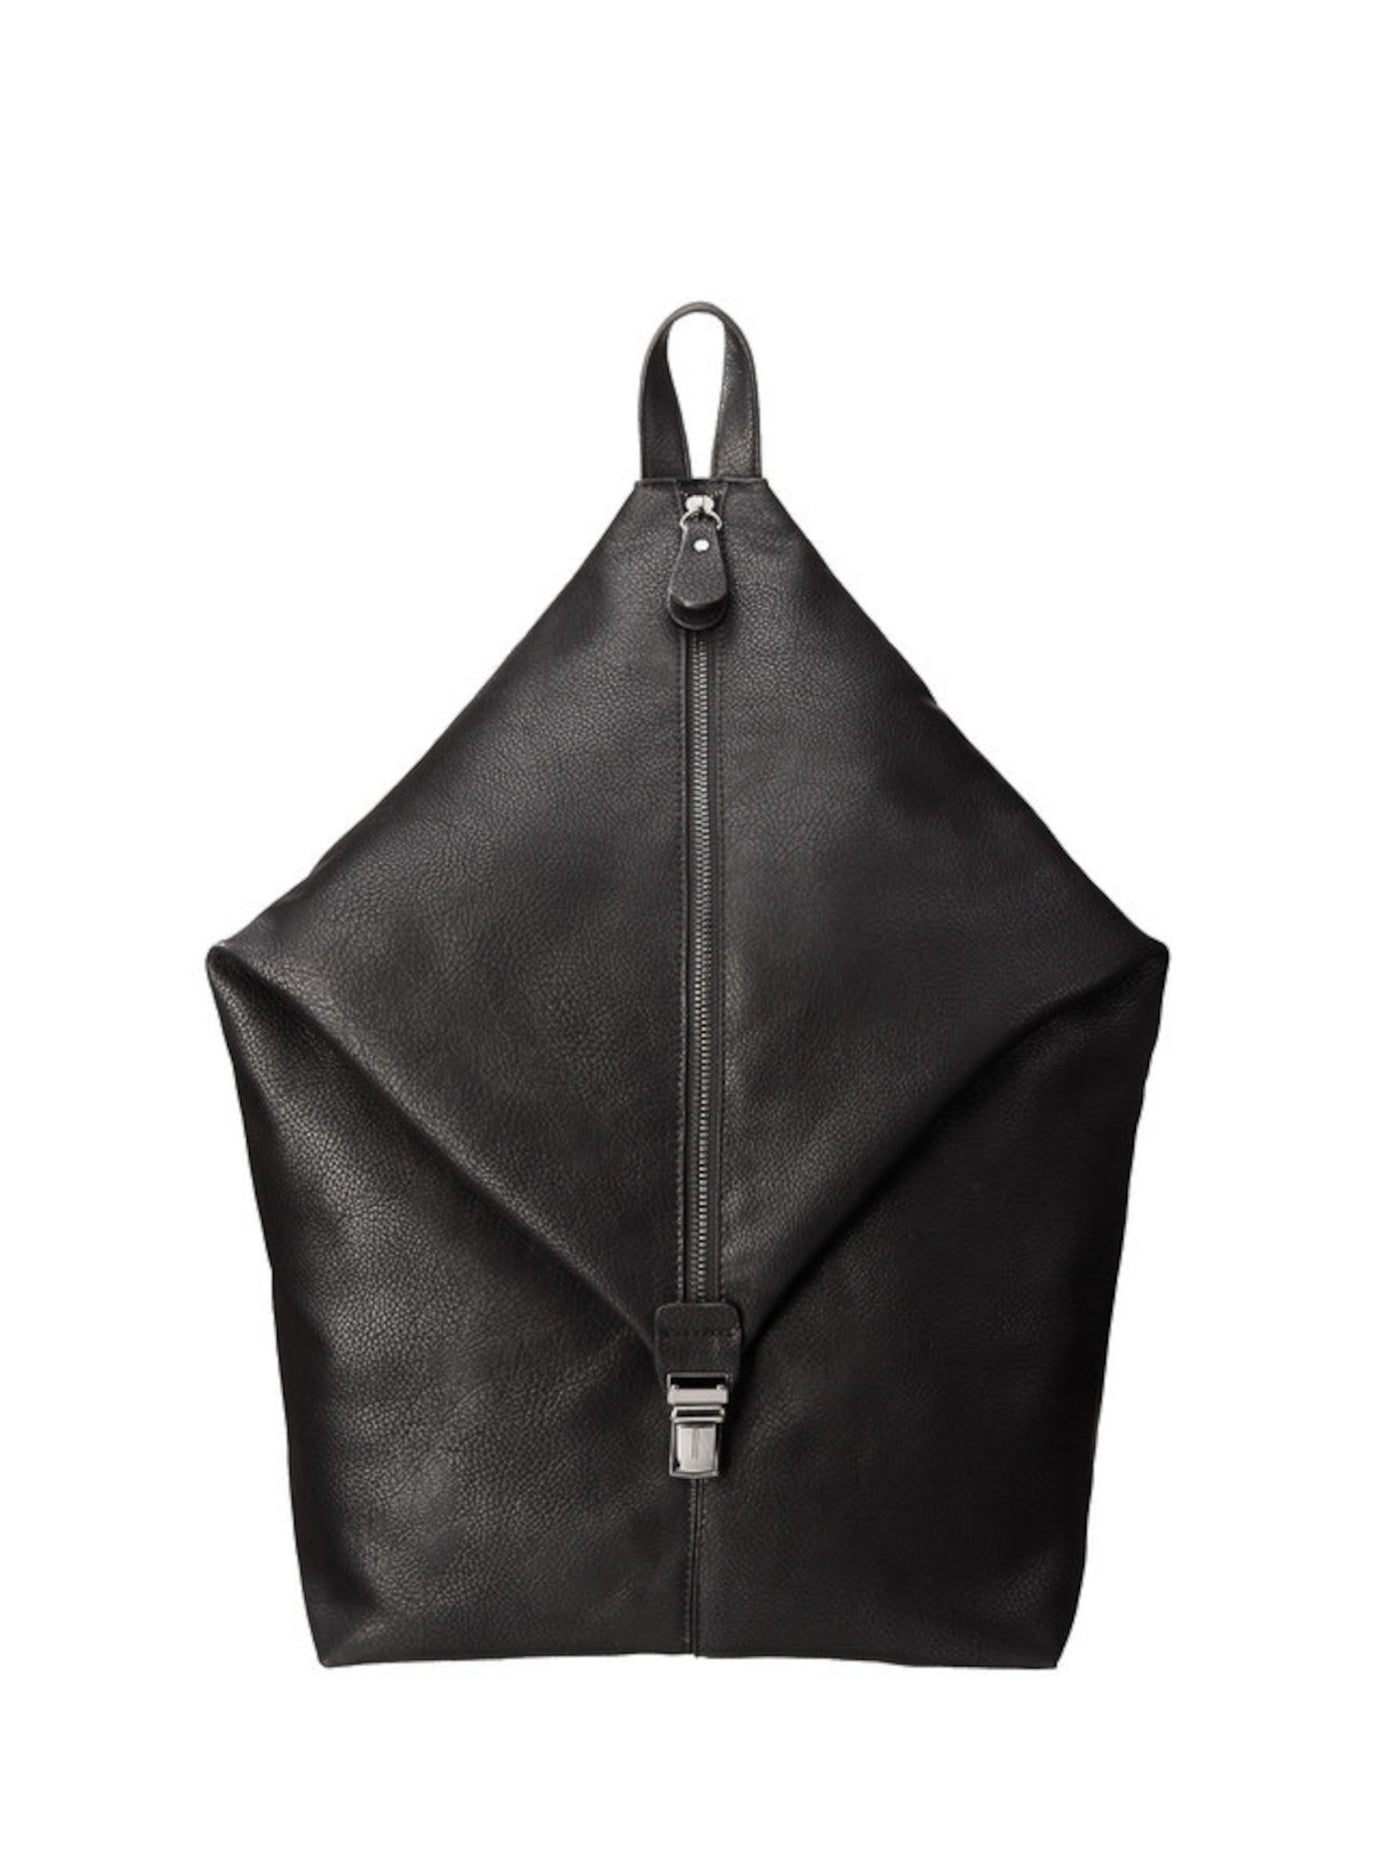 ZUMO Men's Black Feet Leather Adjustable 7.5 Top Handle Adjustable Strap Backpack